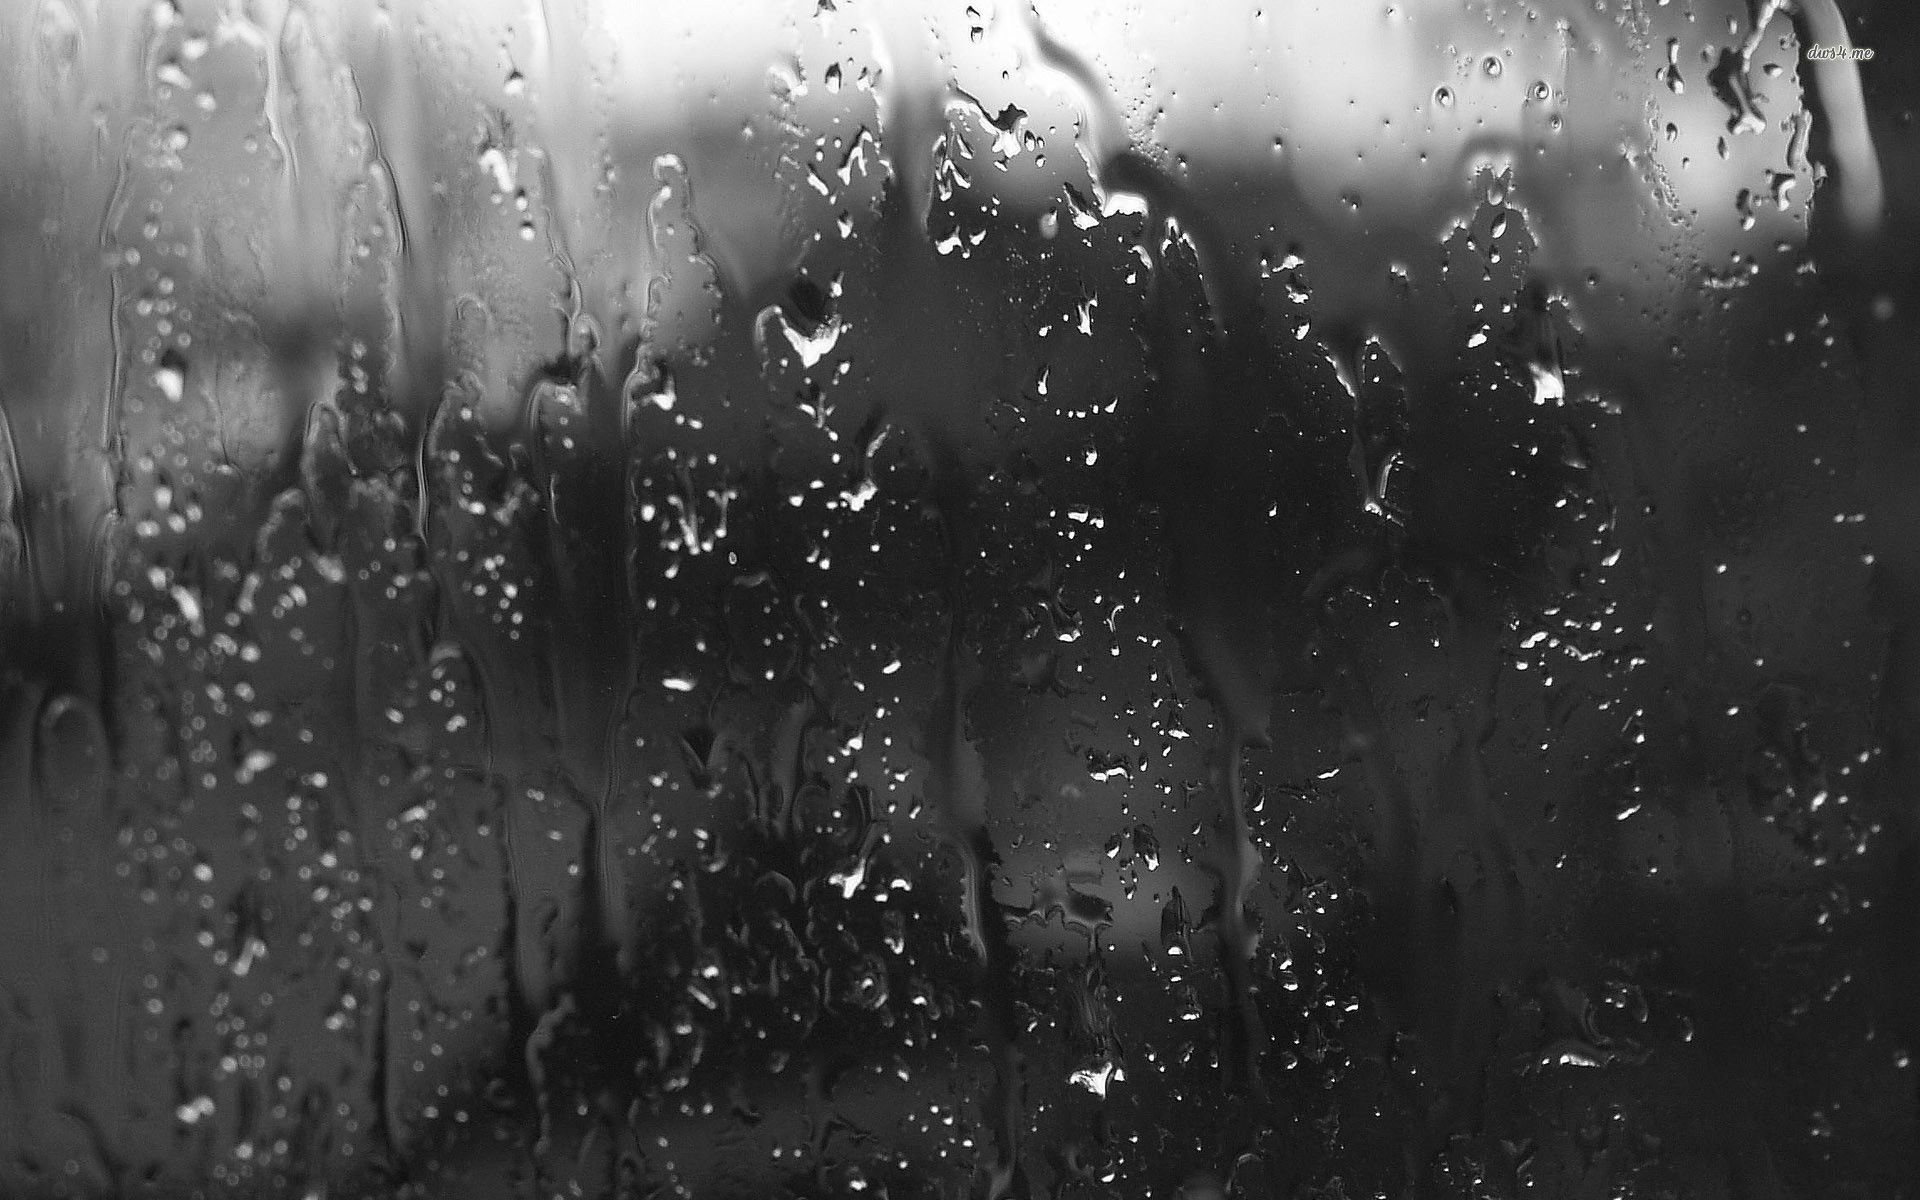 rainy wallpaper | A photography Tutorial | Pinterest | Rainy window ...